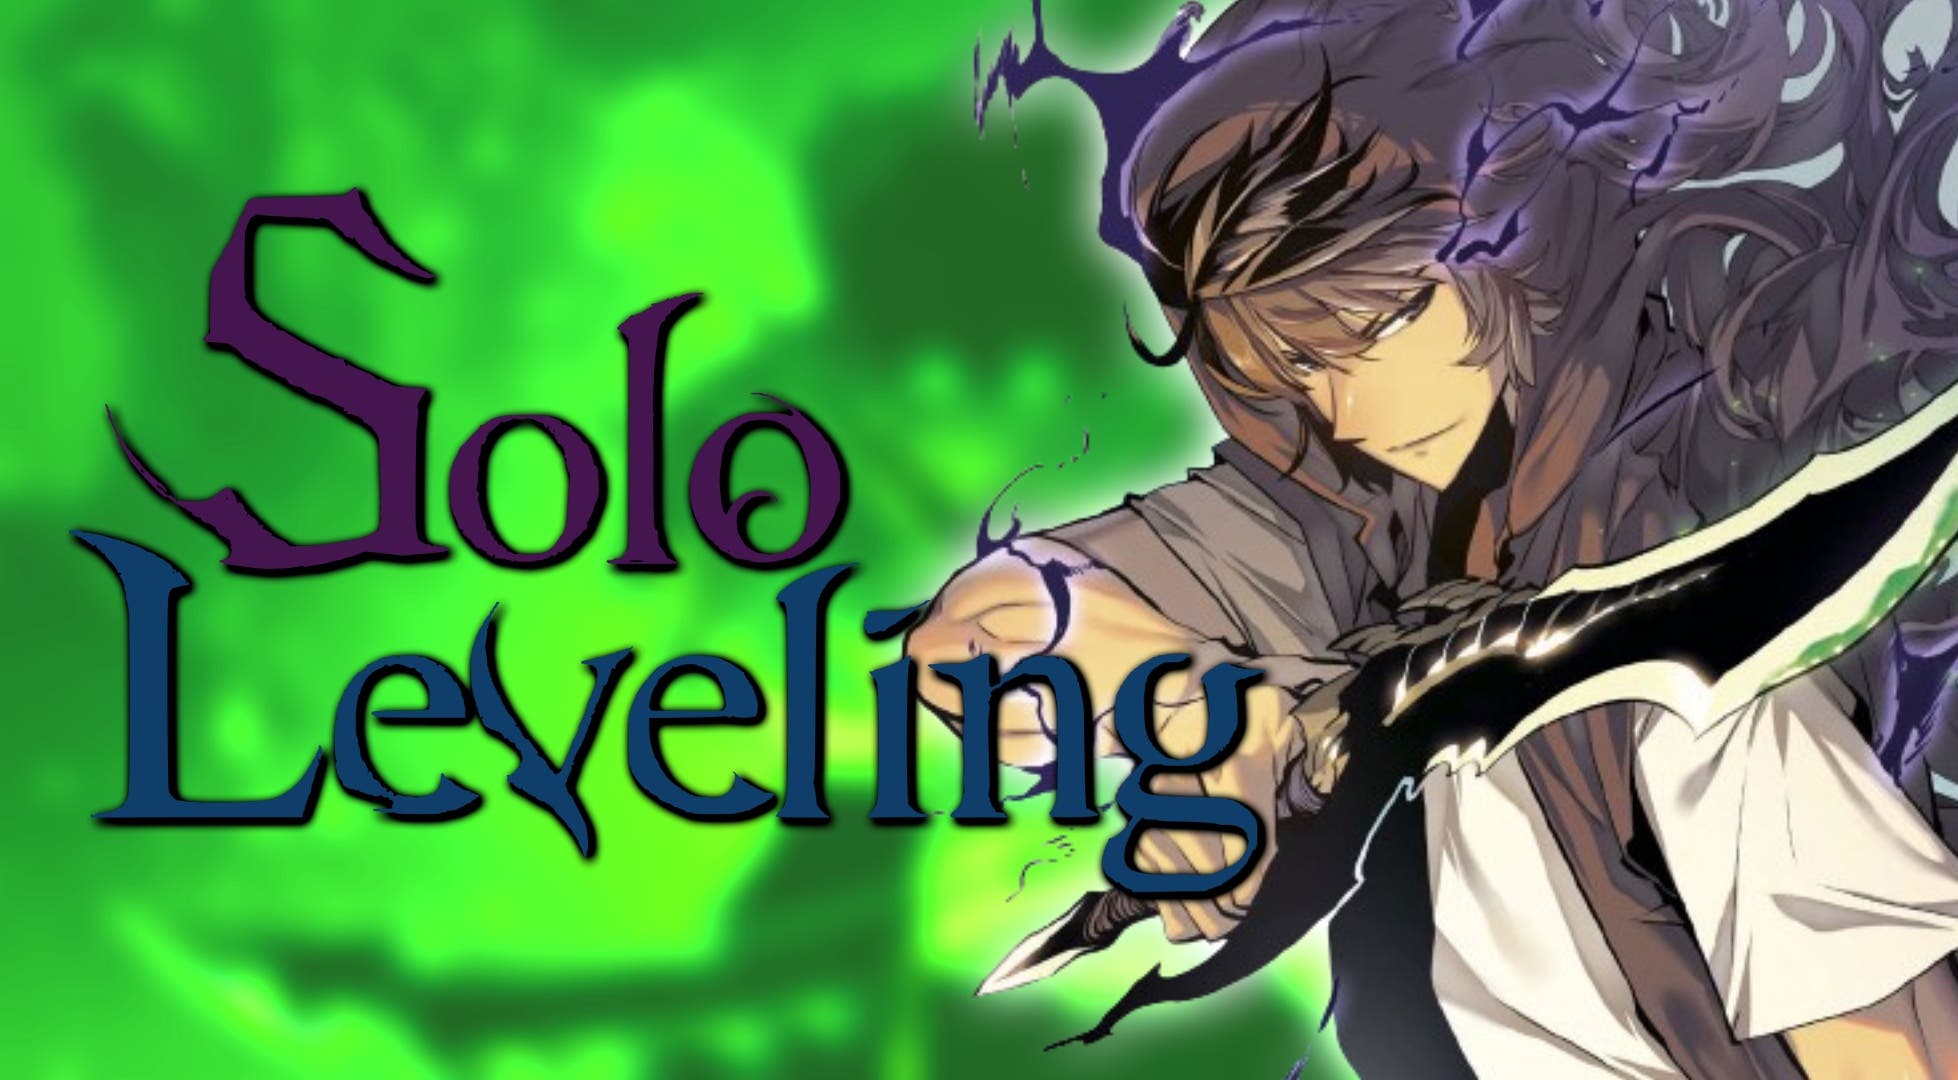 Ver Solo Leveling Capítulo 5 Online Completo Anime Sub Español